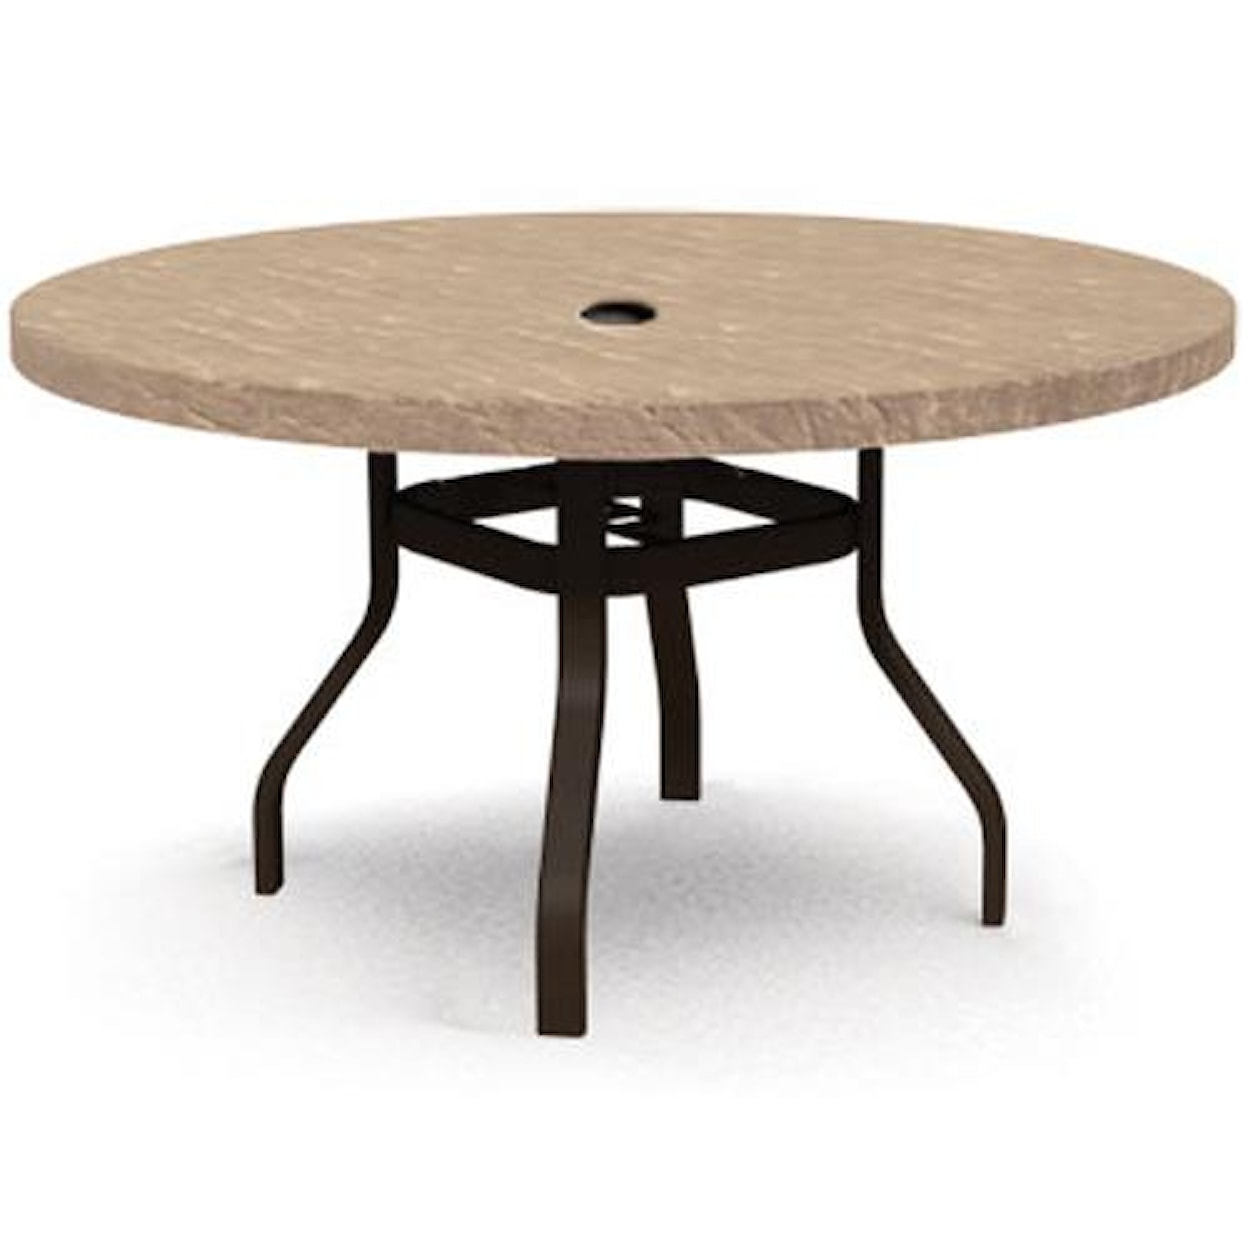 Homecrest Sandstone 42" Round Dining Table Without Umbrella Hole